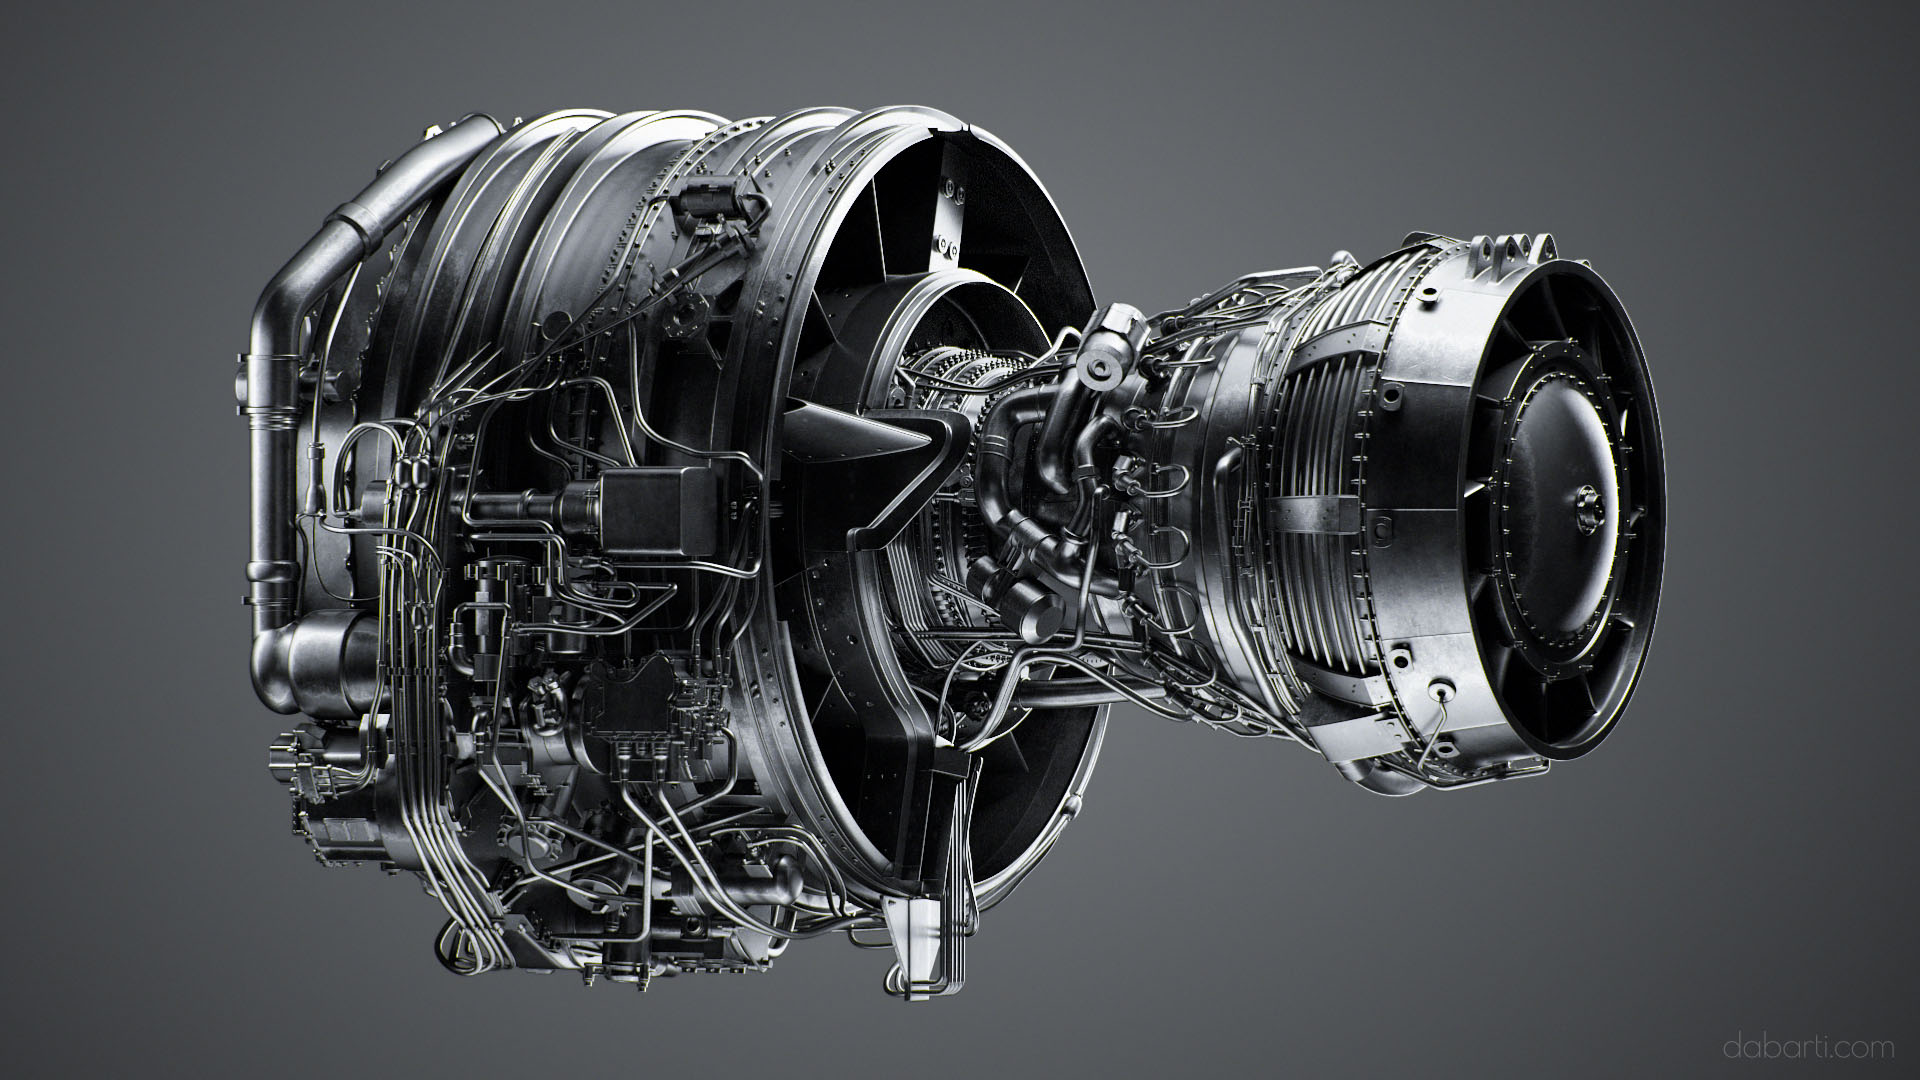 VWArtclub - Jet Engine CFM56